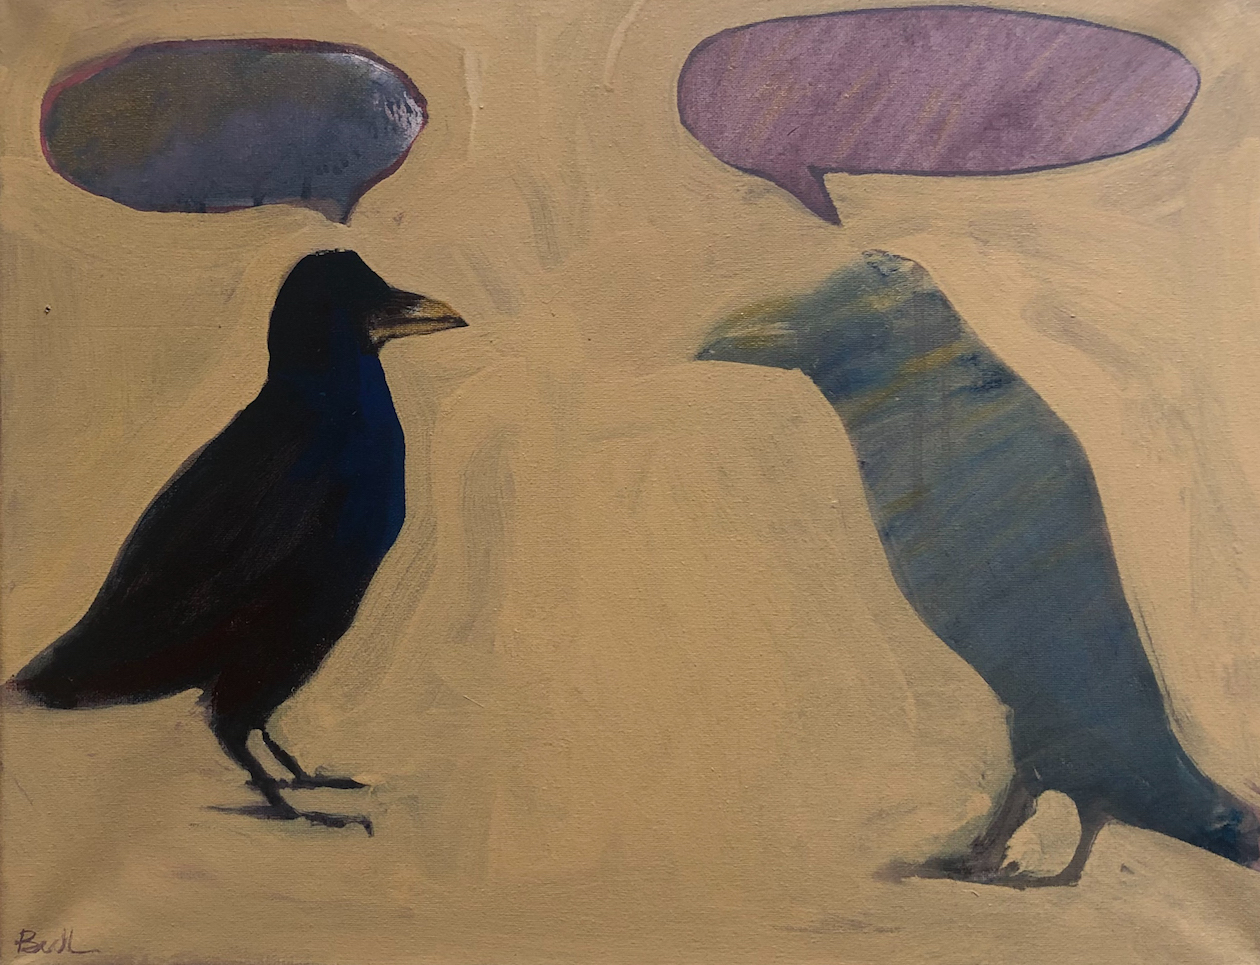 Christopher Bull: Crow Conversation